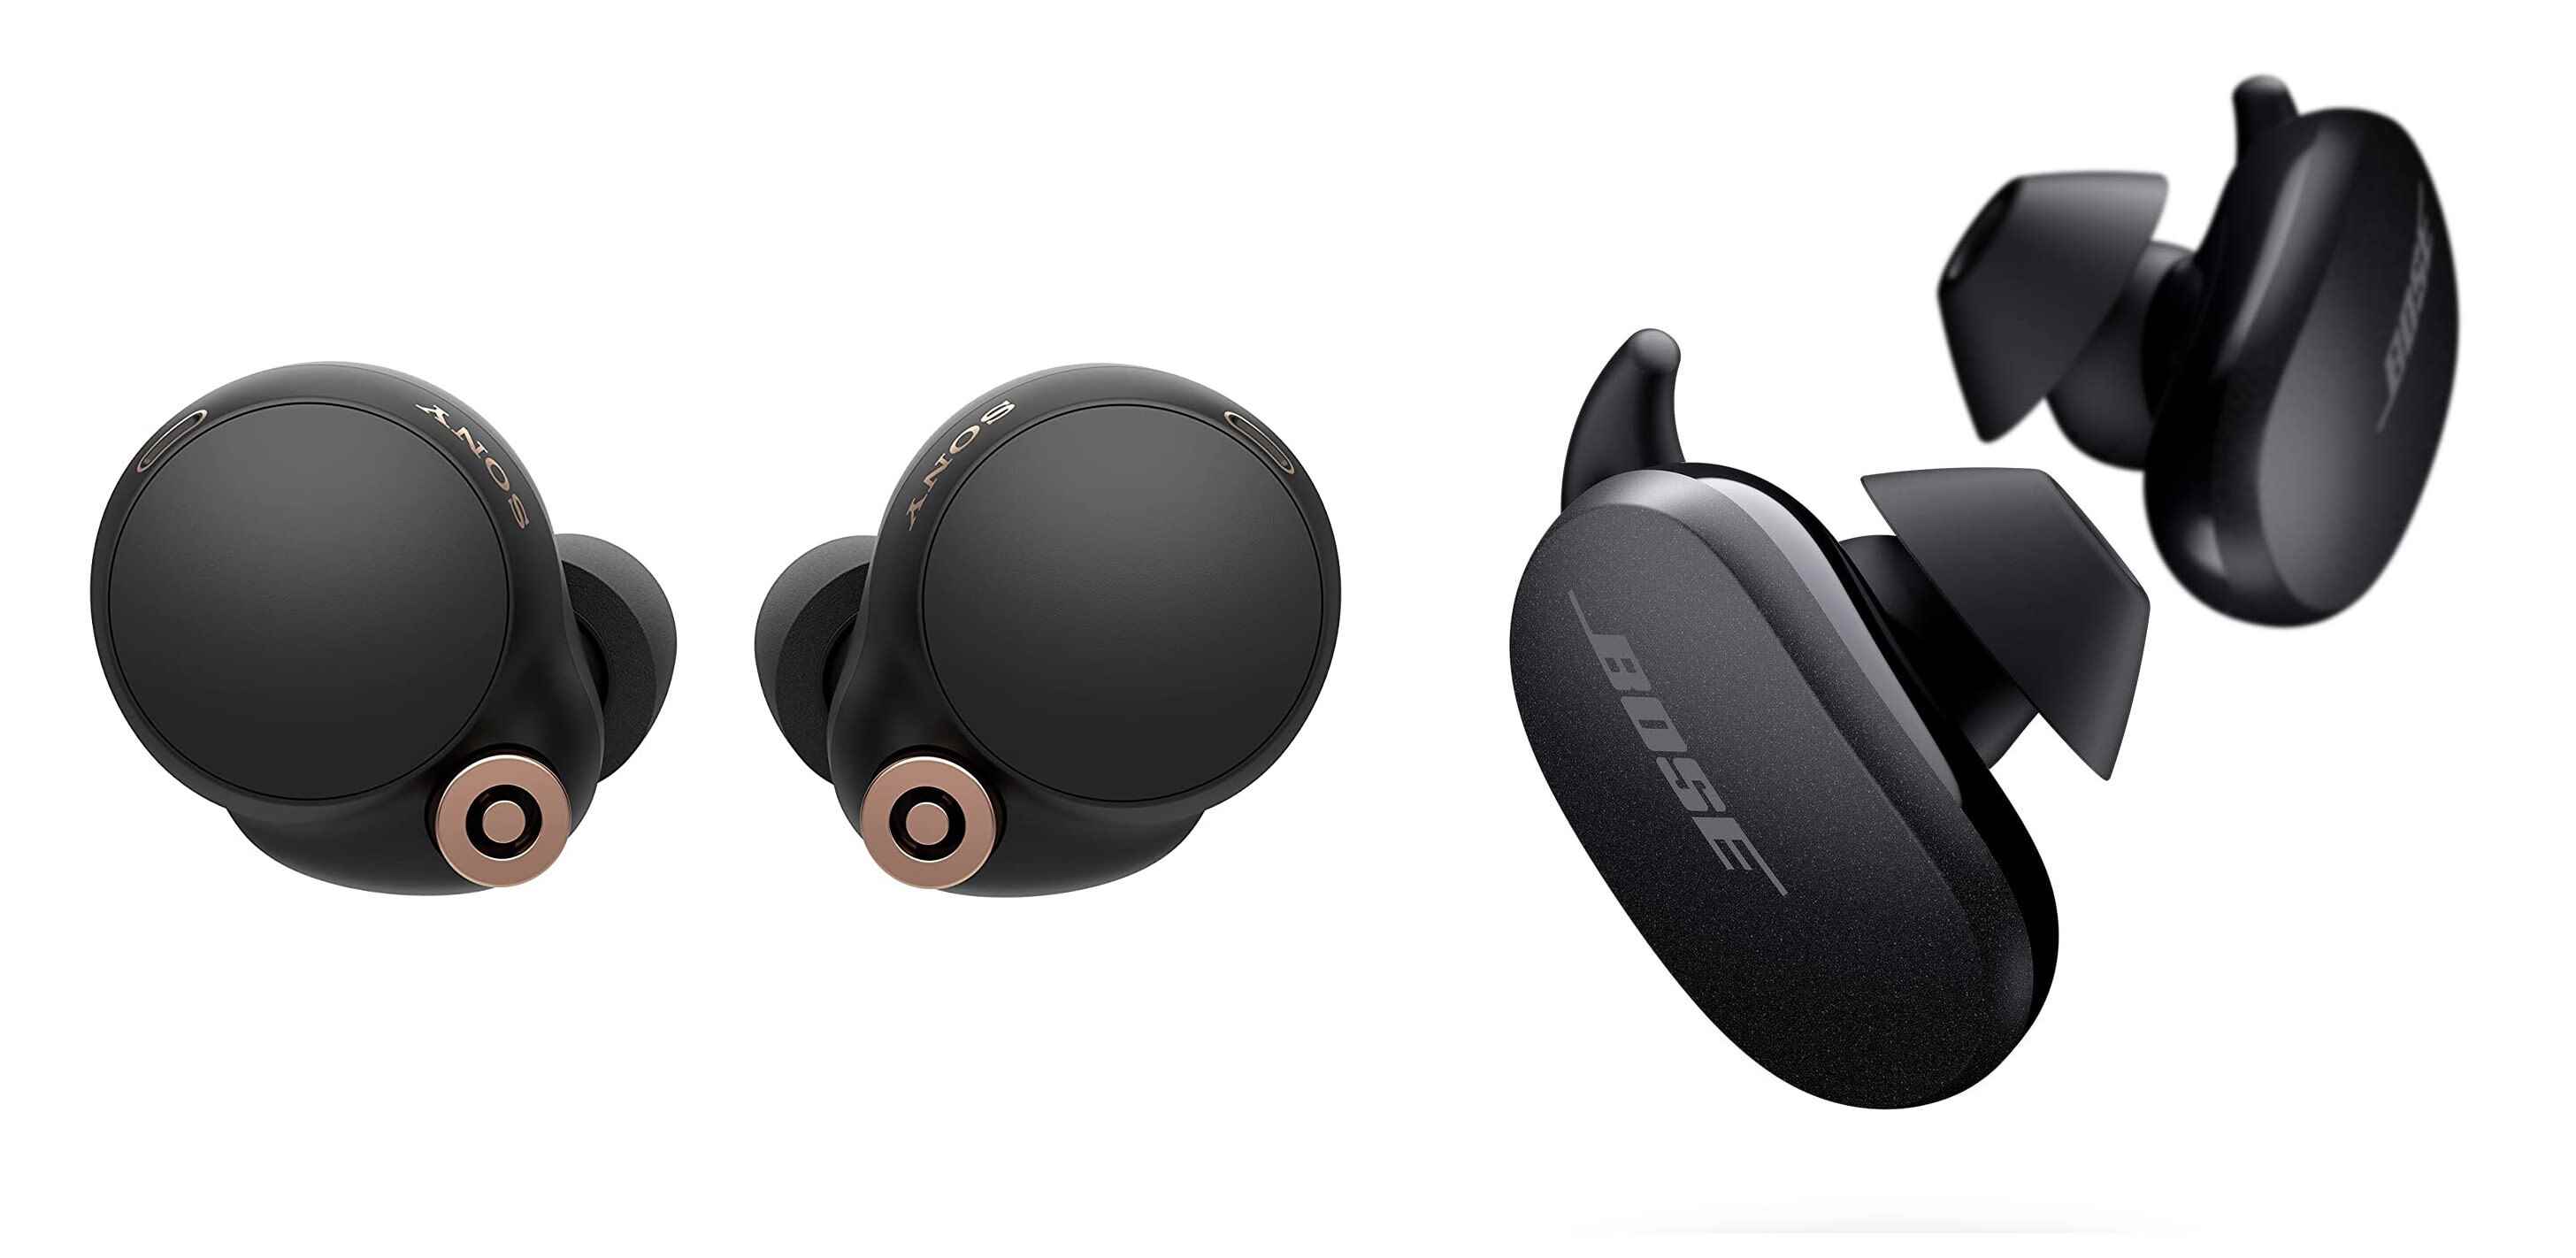 Sony WF-1000XM4 vs Bose QuietComfort Earbuds ve Bose Sport Earbuds vs Beats Fit Pro: Hangisini satın almalı?